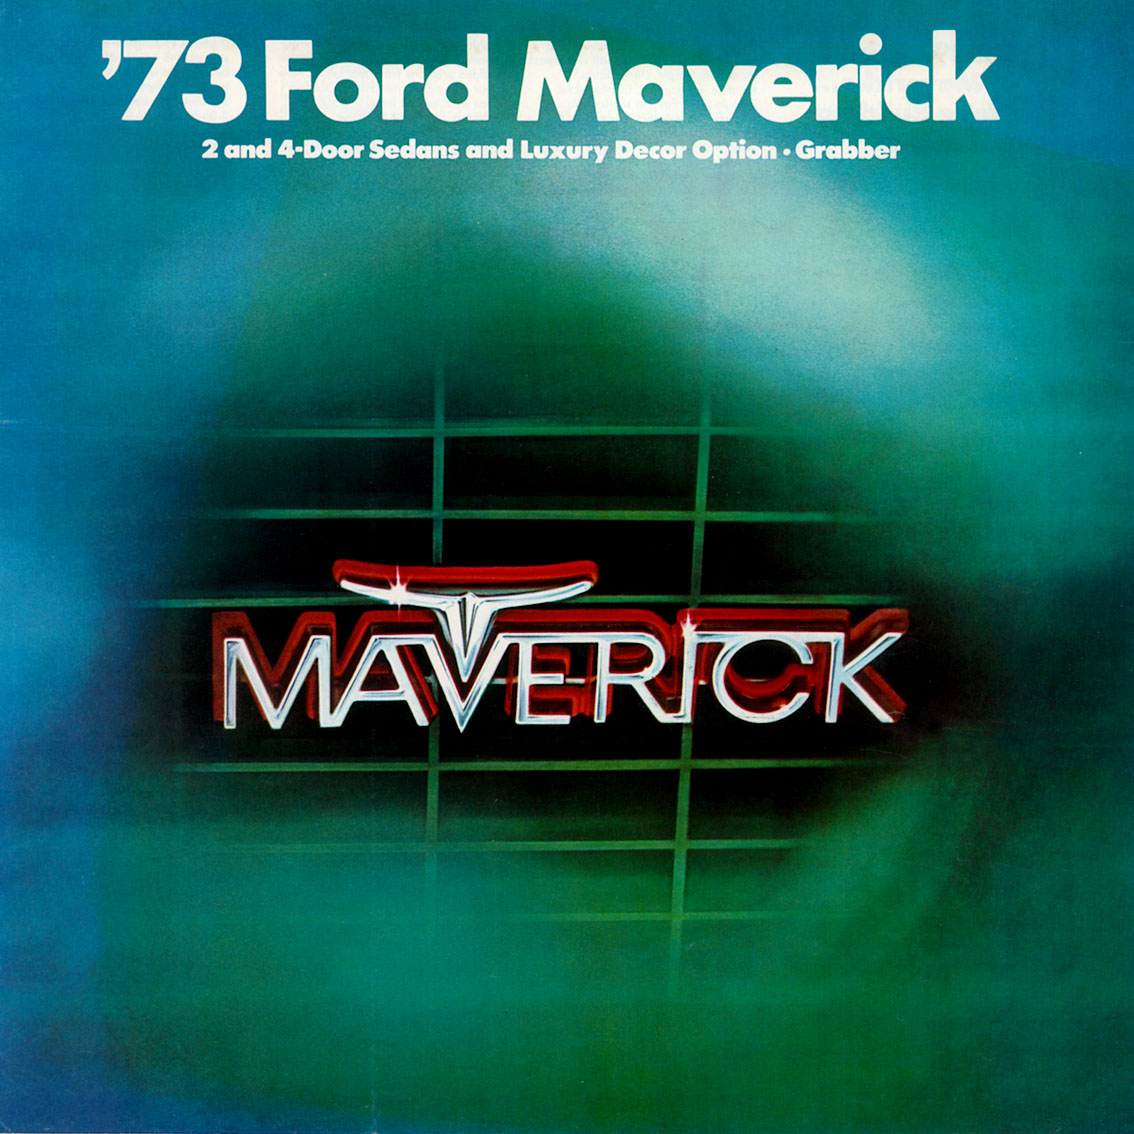 1973_Ford_Maverick-01